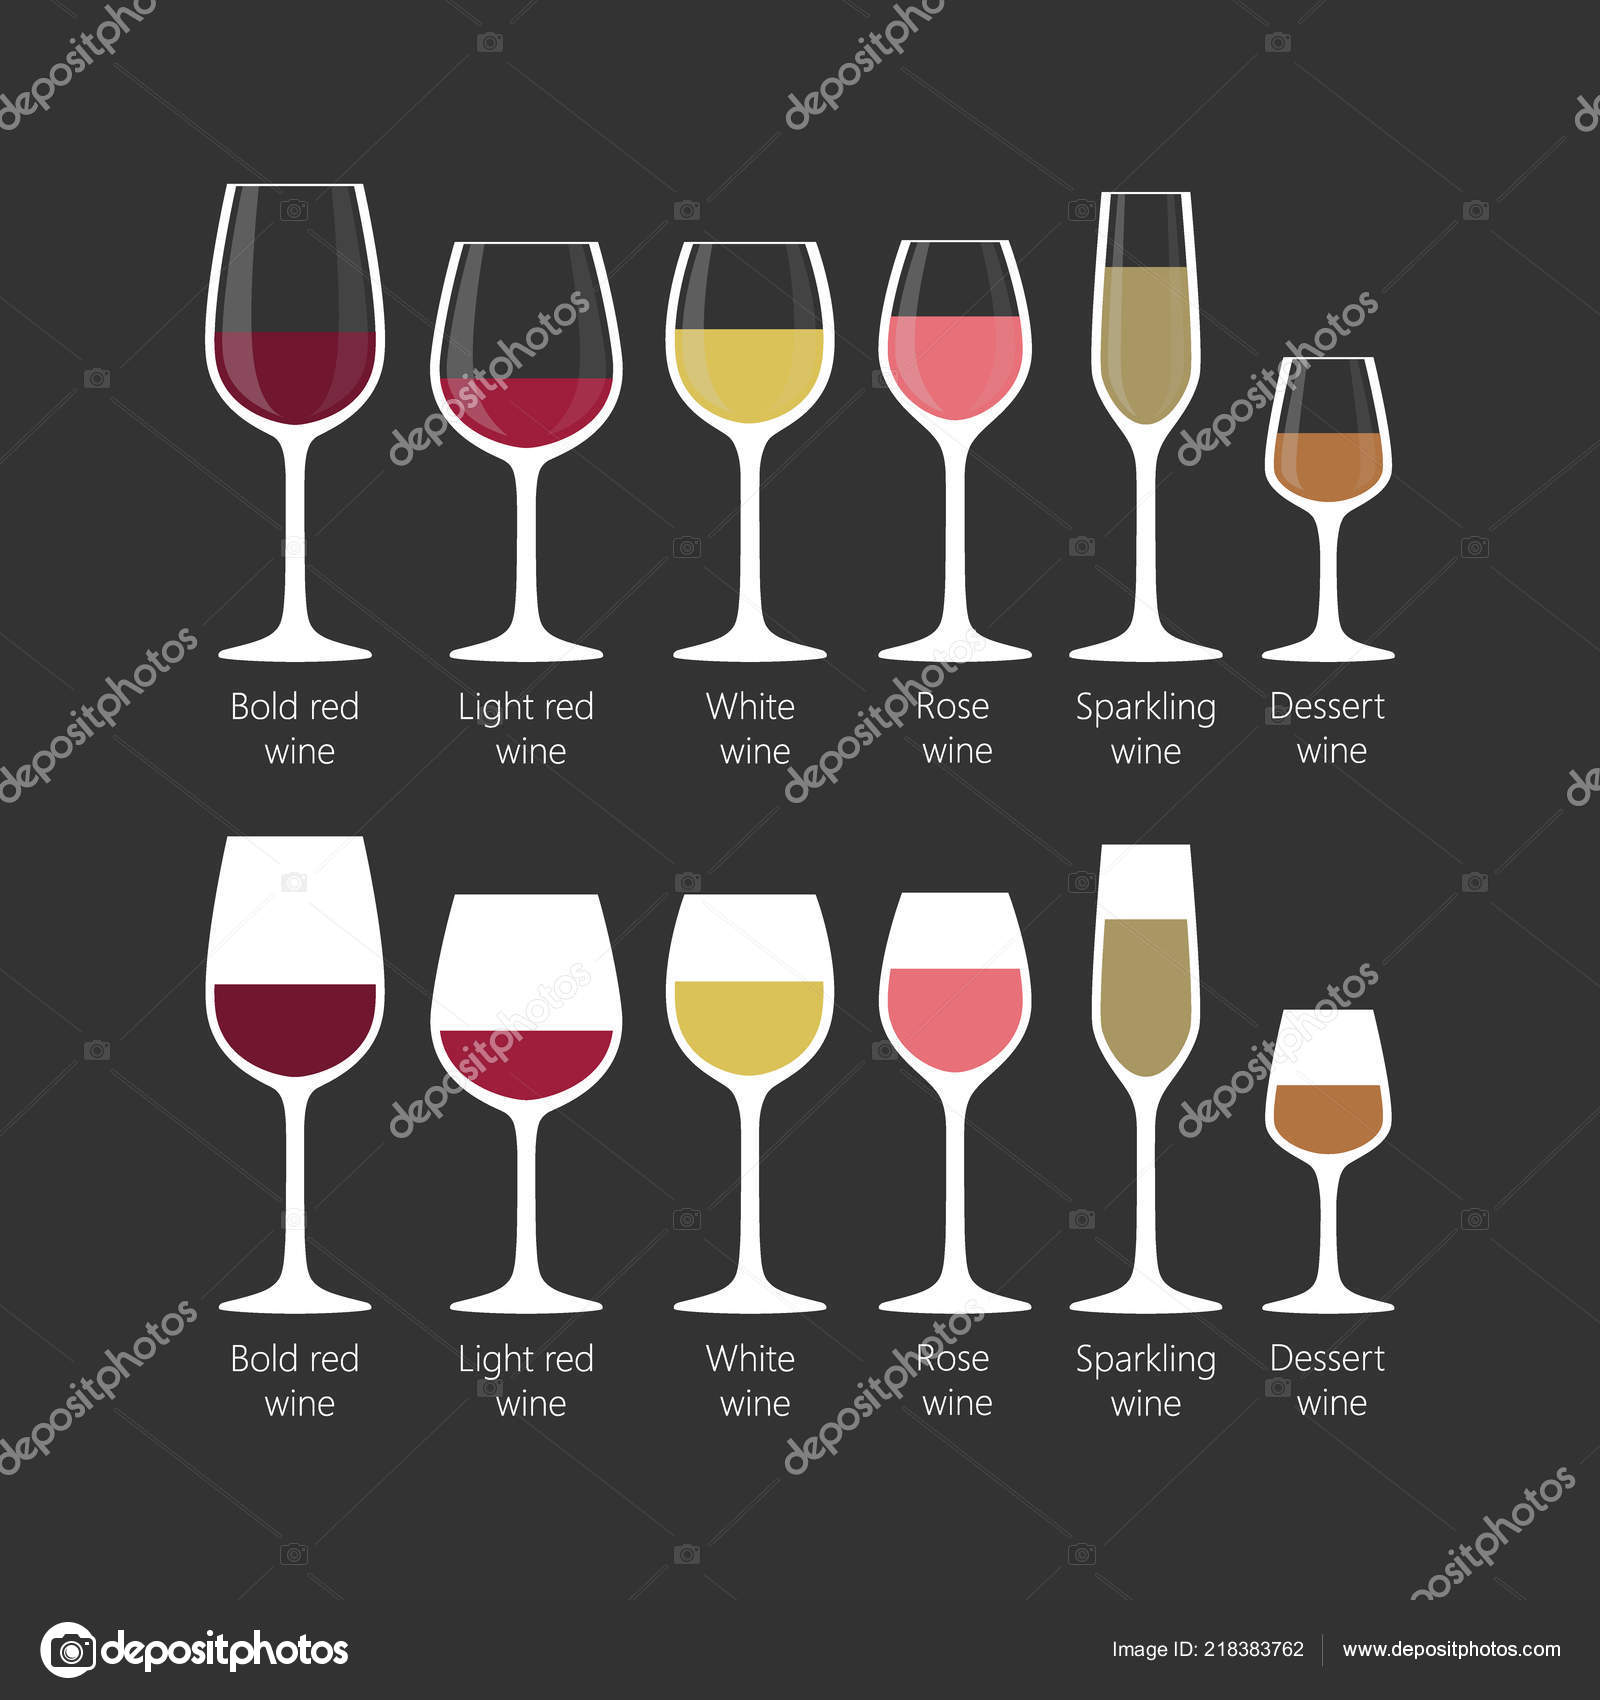 https://st4.depositphotos.com/17553142/21838/v/1600/depositphotos_218383762-stock-illustration-types-wine-glasses-set-colorful.jpg